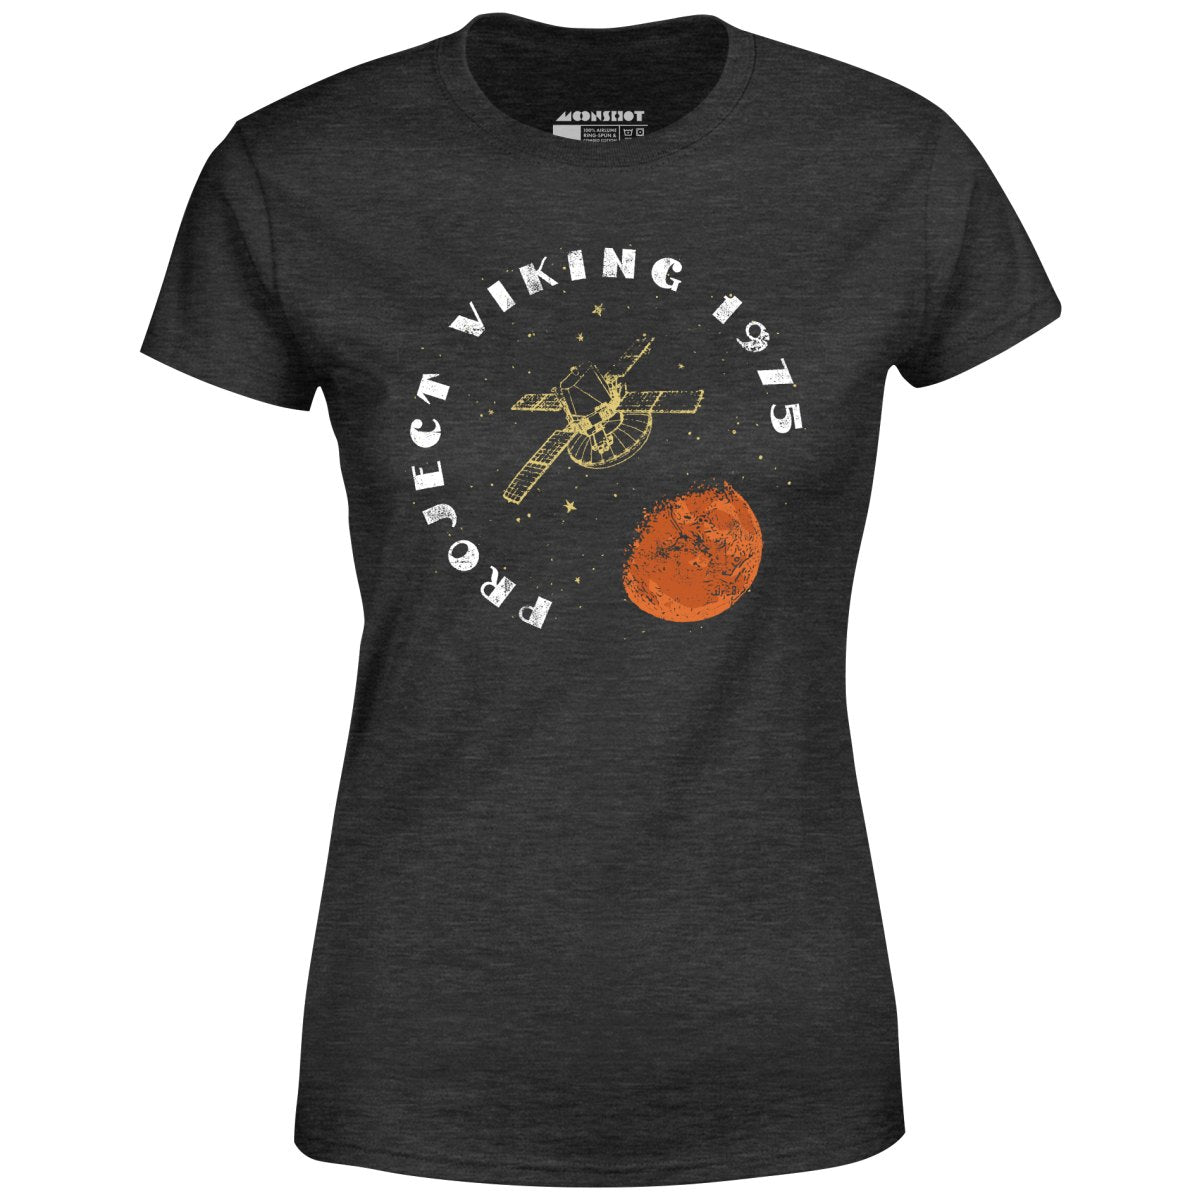 Project Viking 1975 - Women's T-Shirt